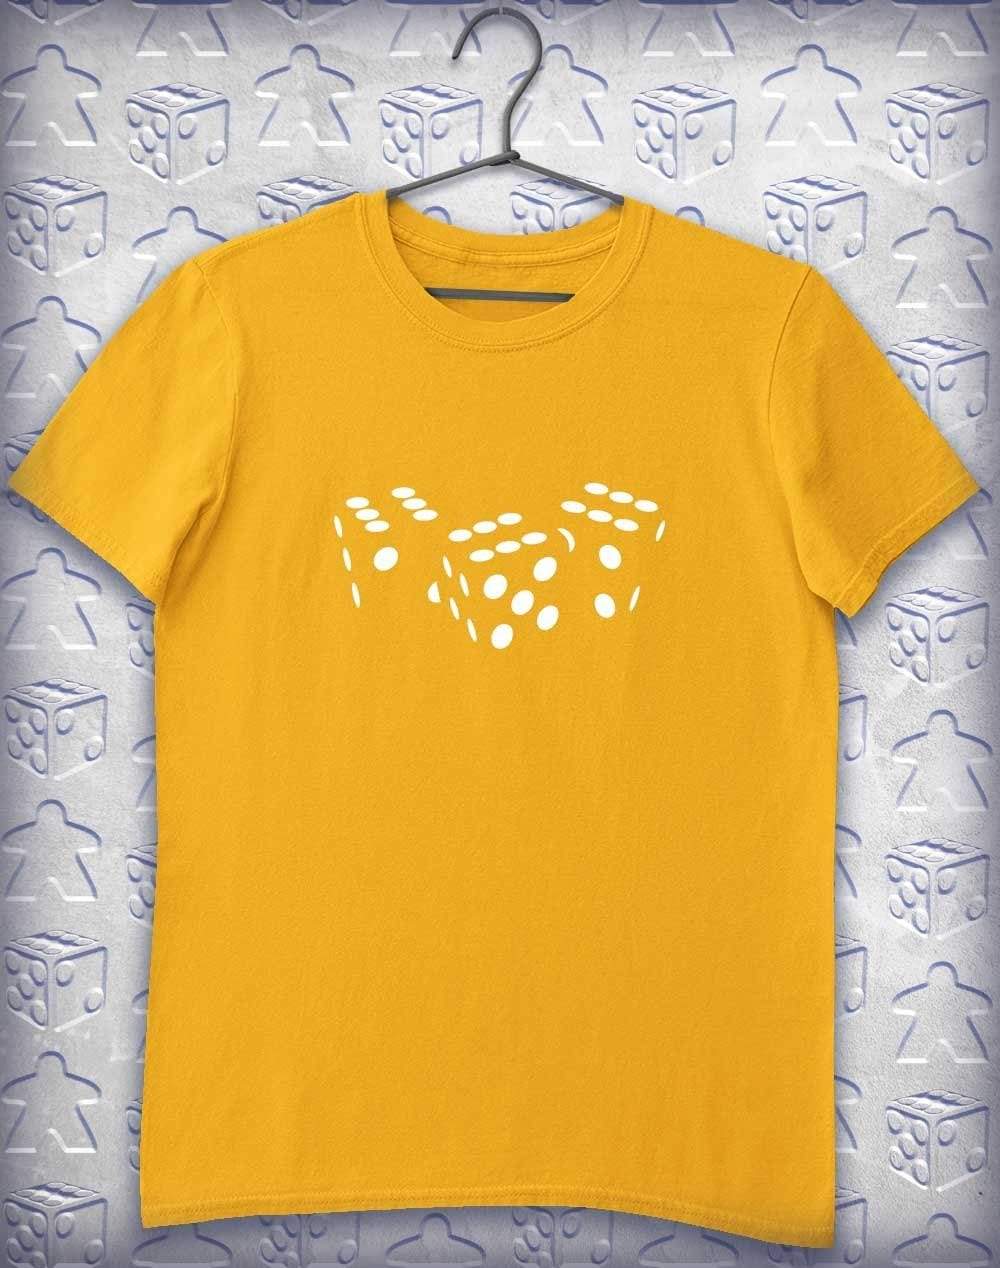 Pips Alphagamer T-Shirt S / Gold  - Off World Tees